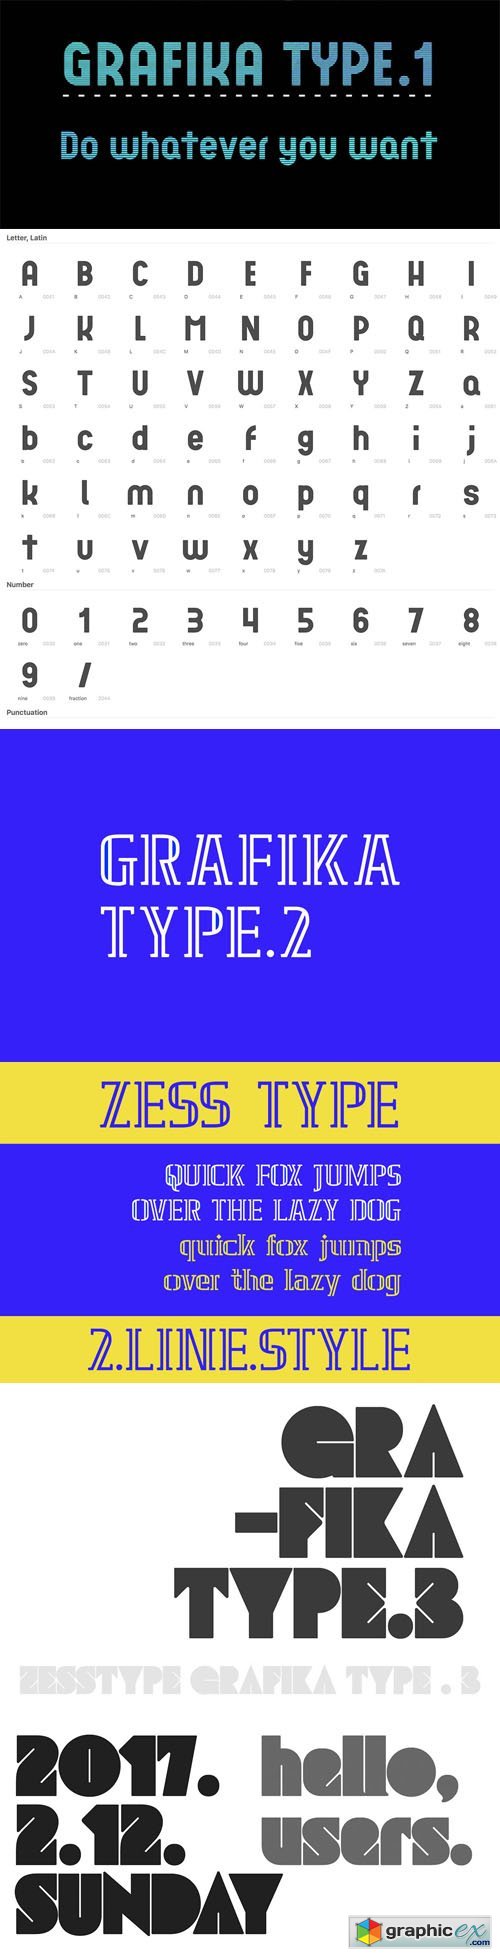 Grafika Sans Serif Fonts [Type 1,2,3]